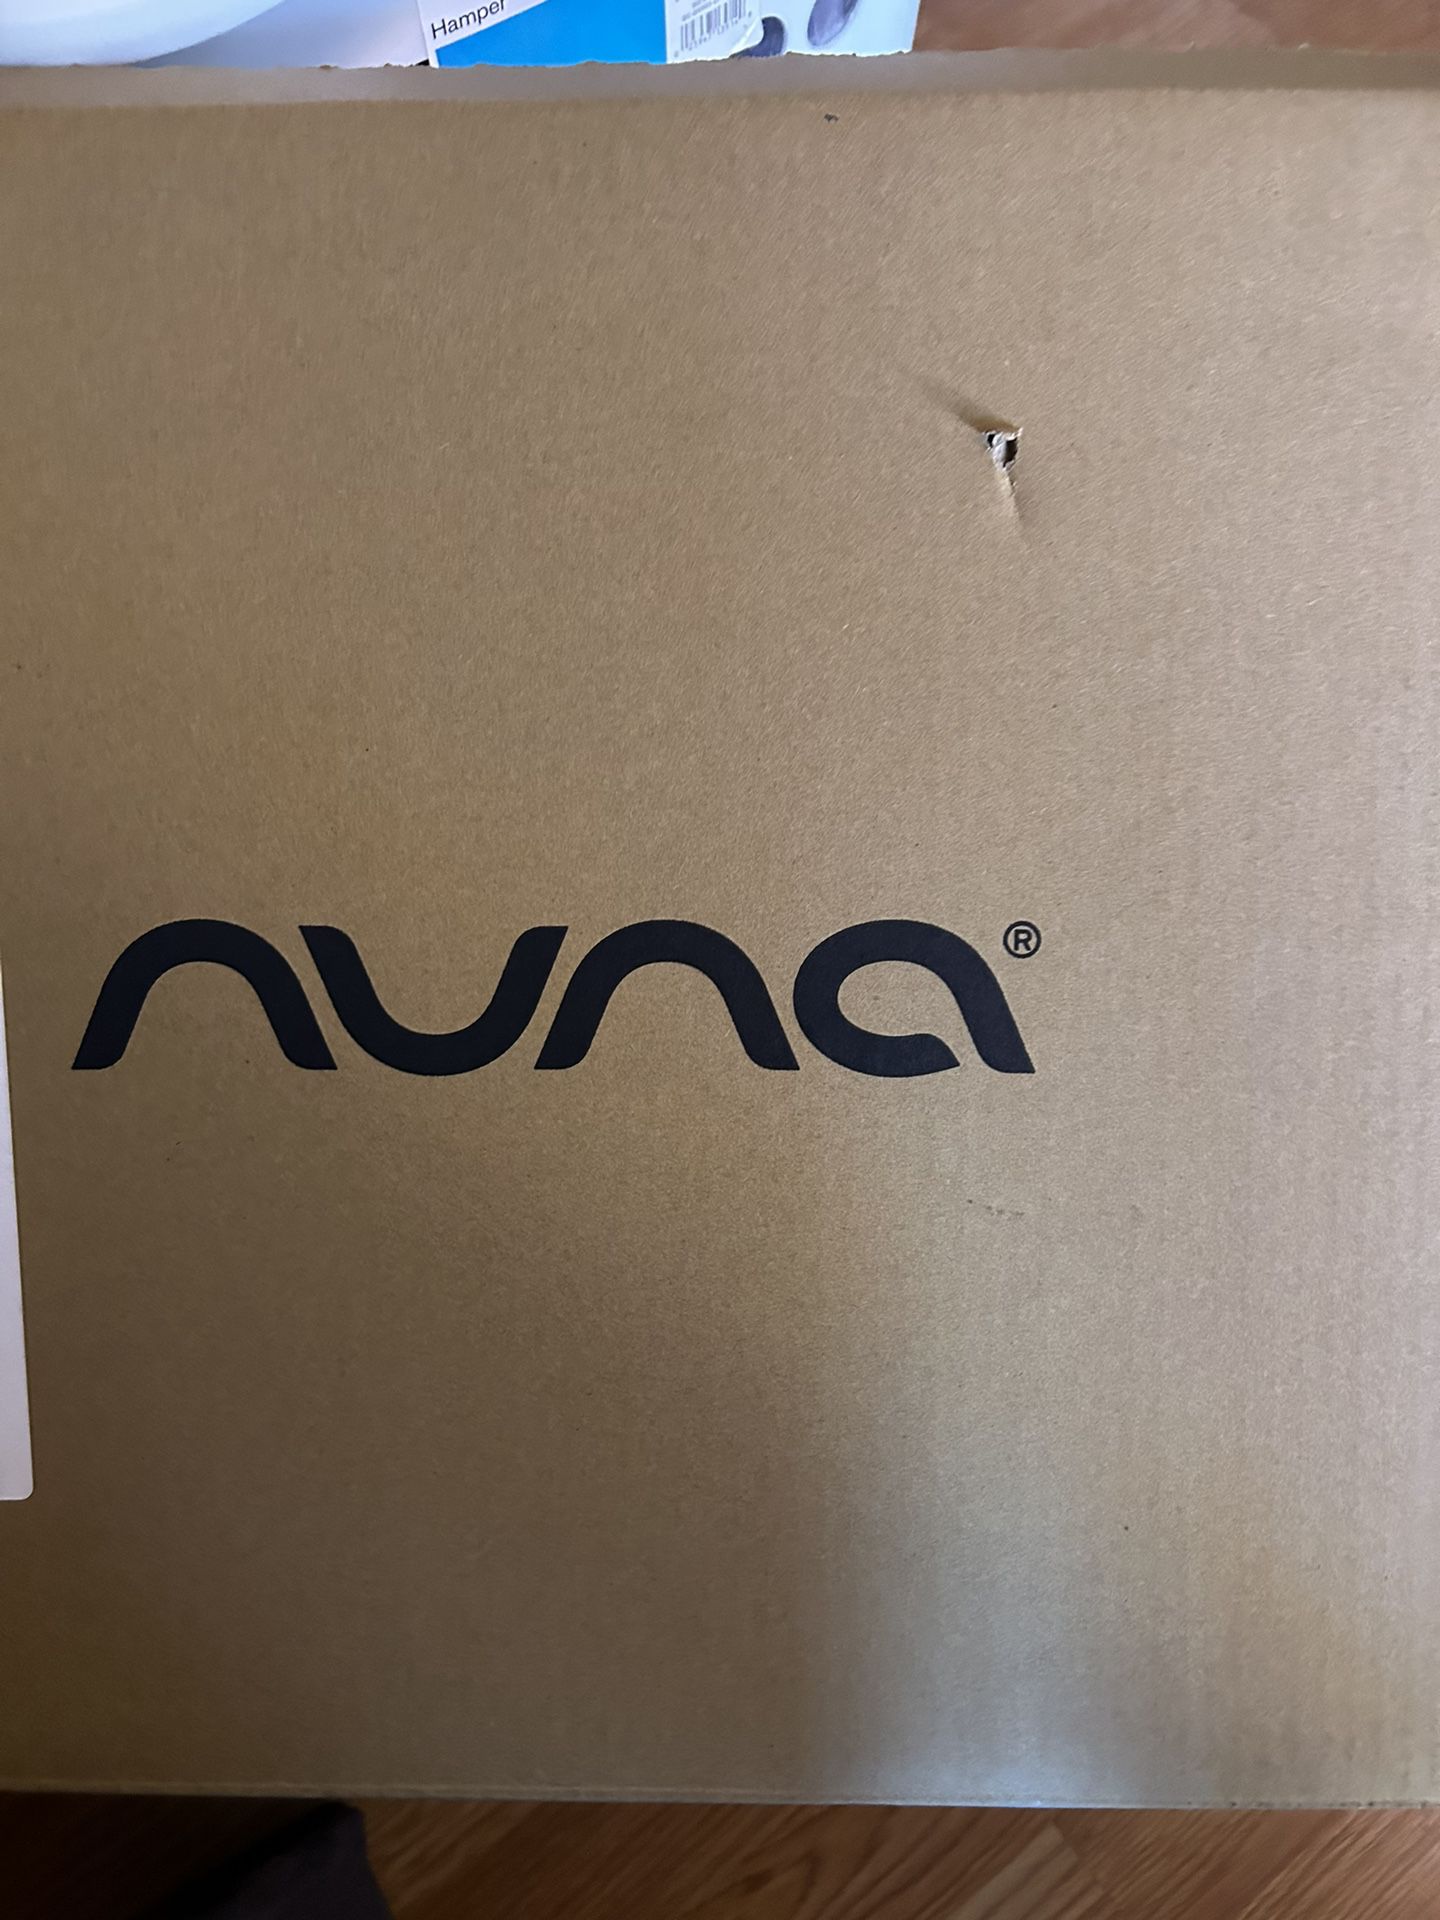 Nuna Car seat Adapter For Nuna Mixx Stroller 